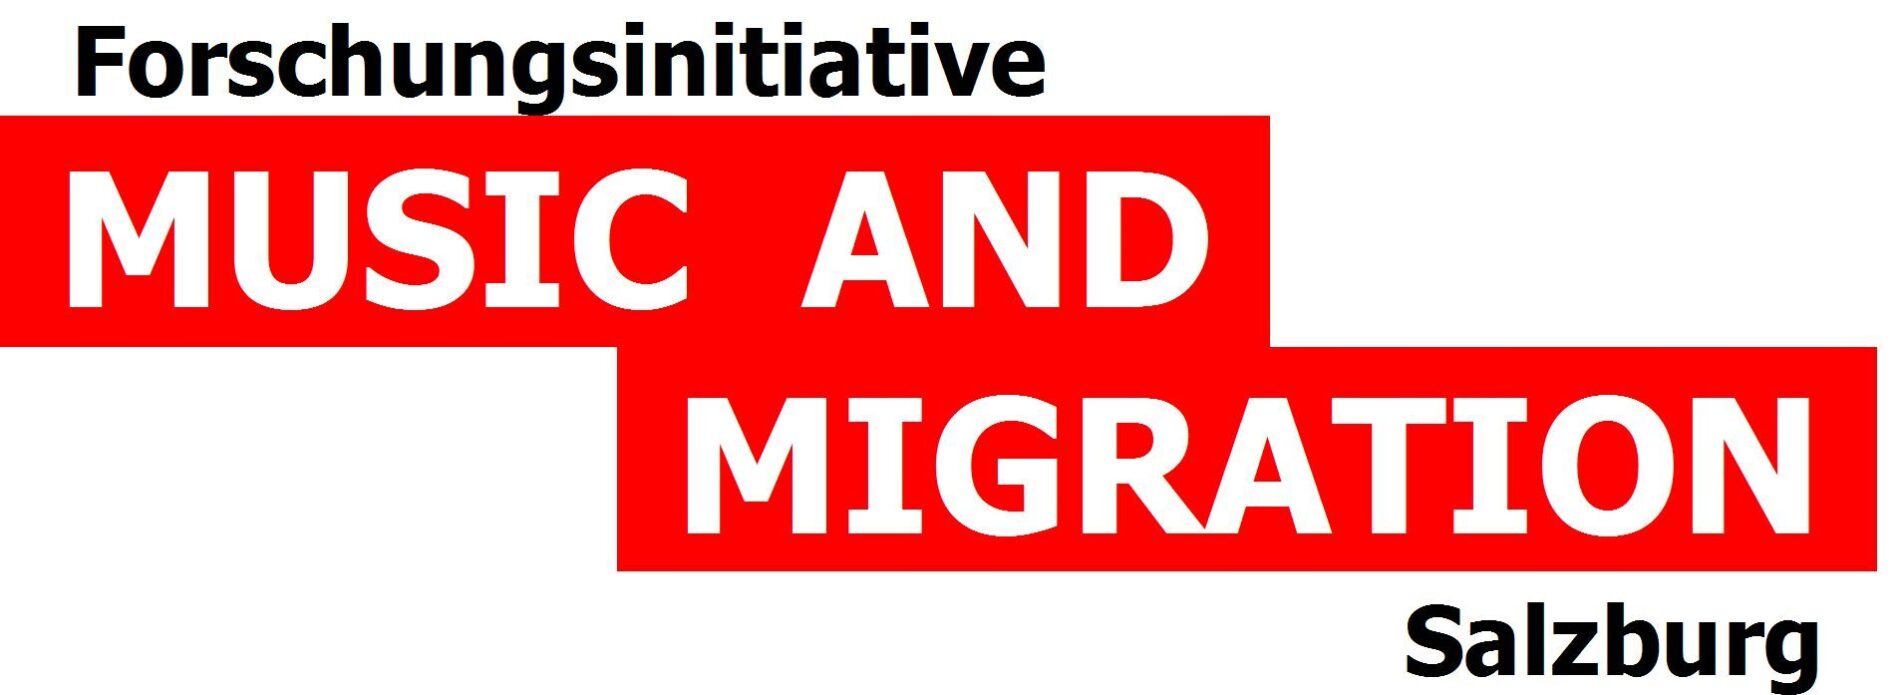 Forschungsinitiative Music and Migration Salzburg